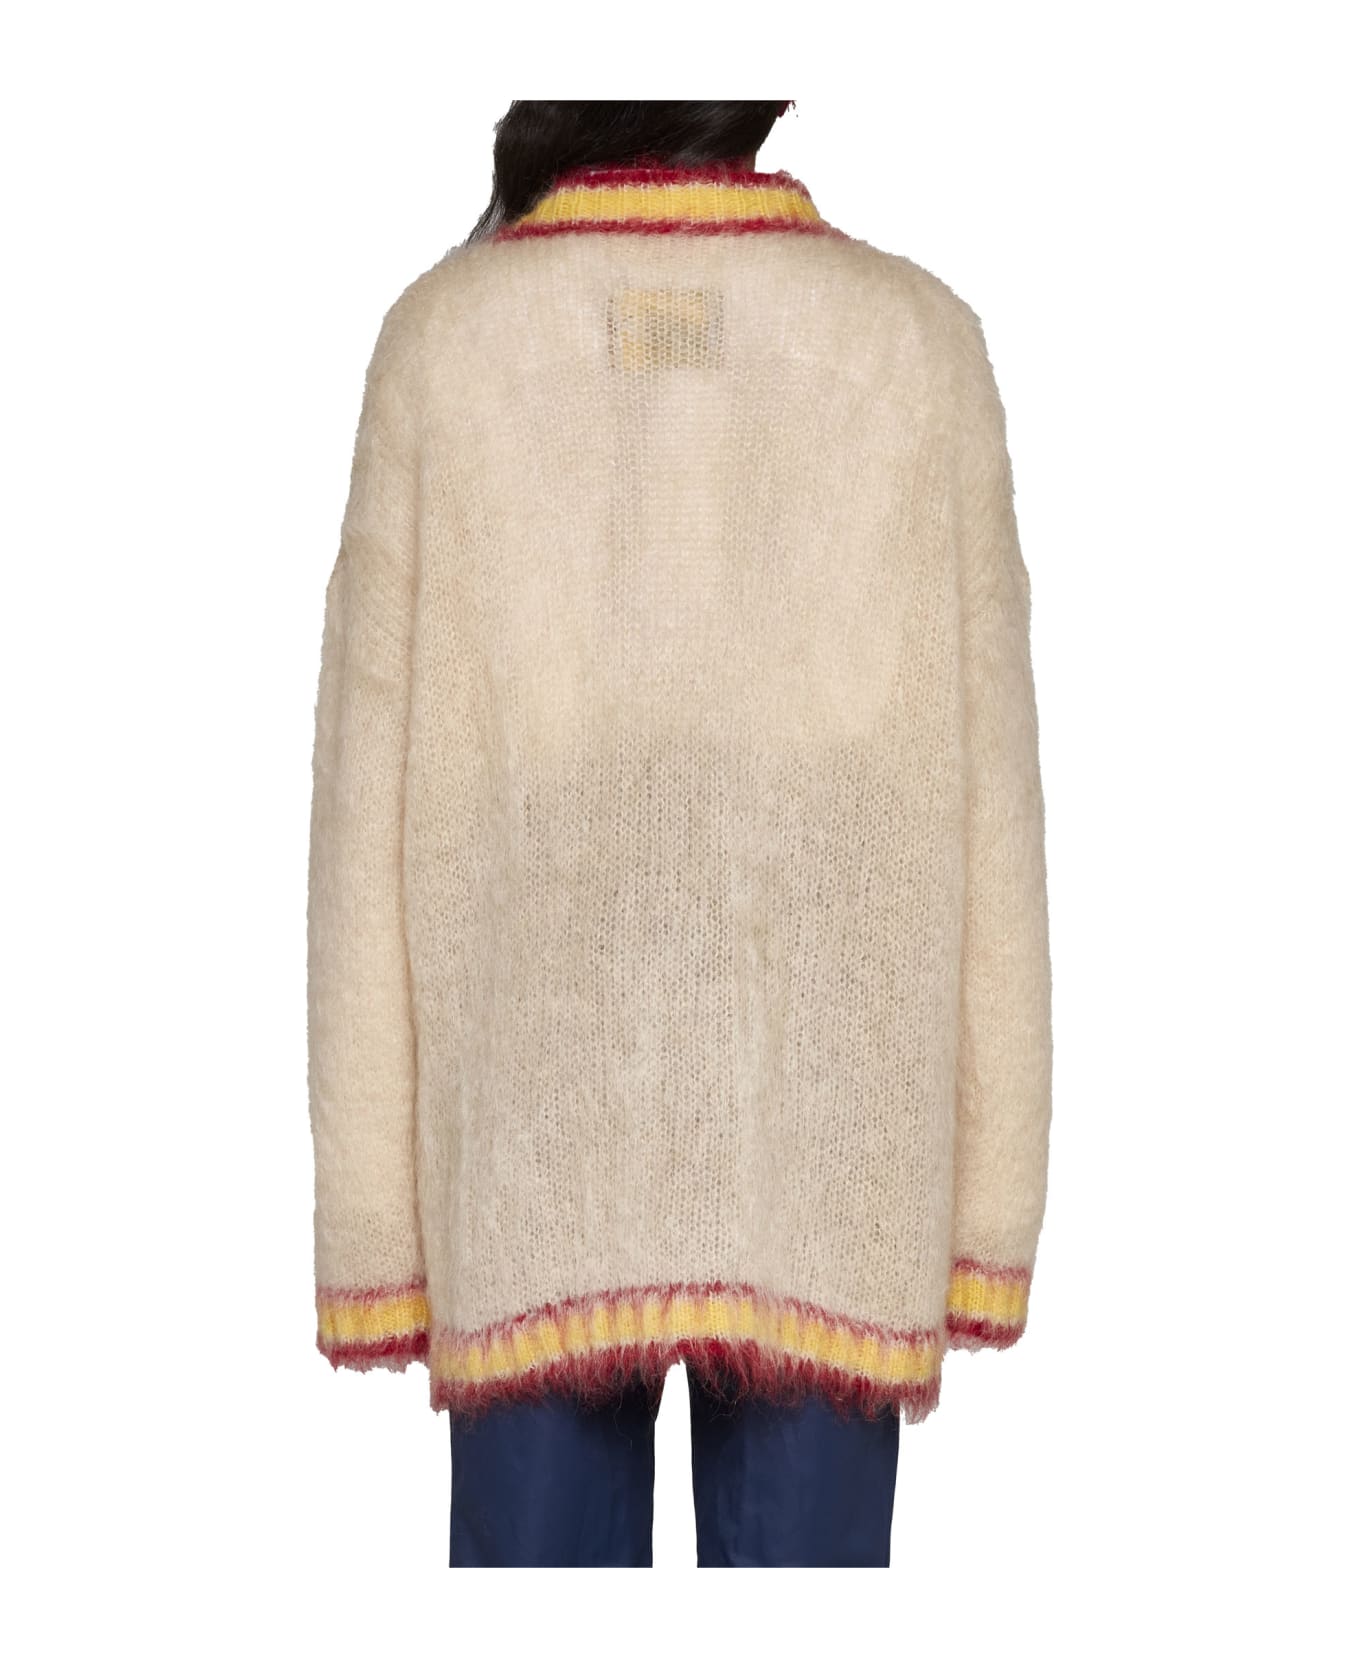 Marni Multicolor Mohair Blend Sweater - Tan